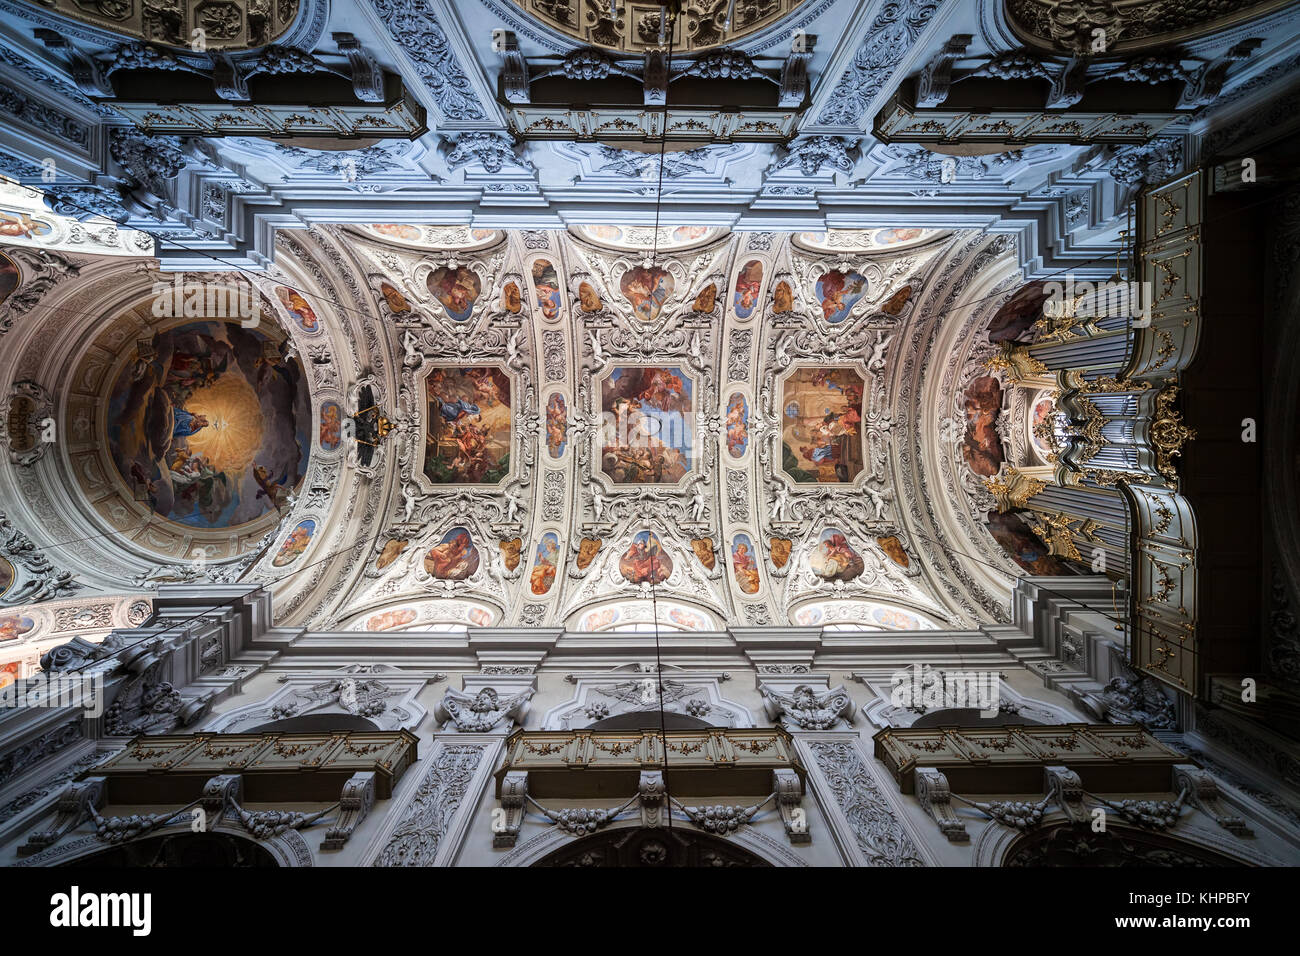 Dominican Church (Dominikanerkirche) interior in Vienna city, Austria, barrel vault ceiling with stucco and frescos, elaborate ornamentation Stock Photo